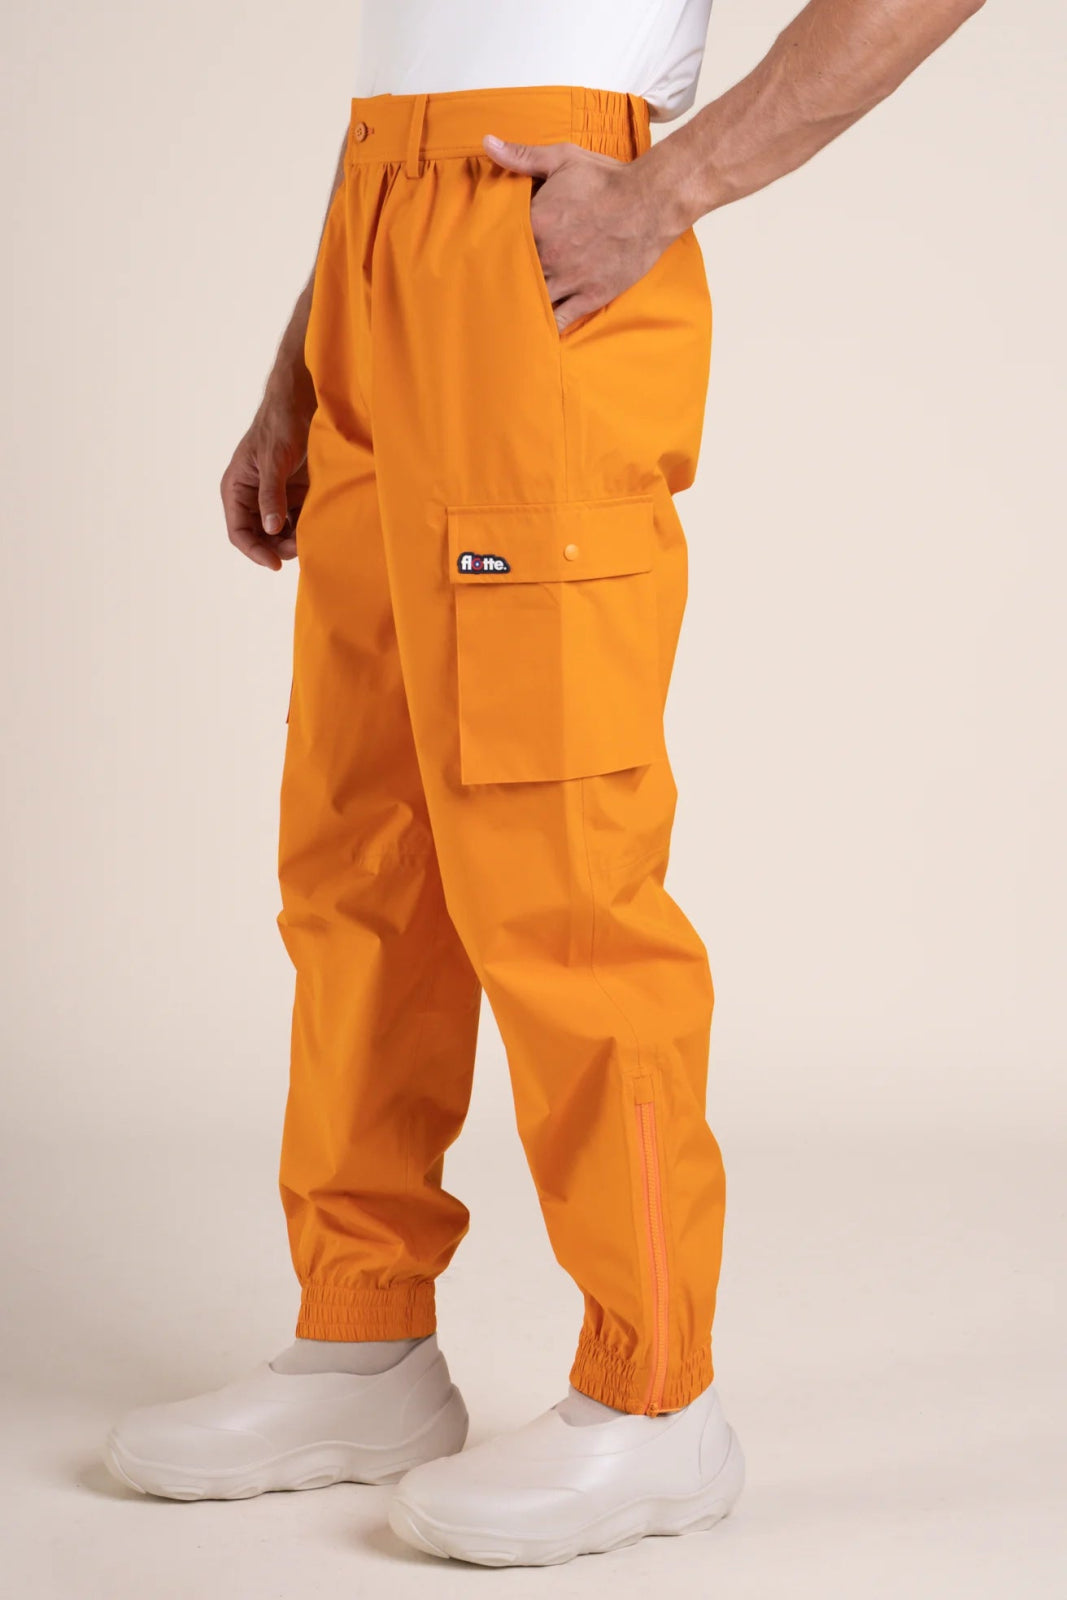 Gambetta multi-pocket waterproof cargo pants #couleur_abricot